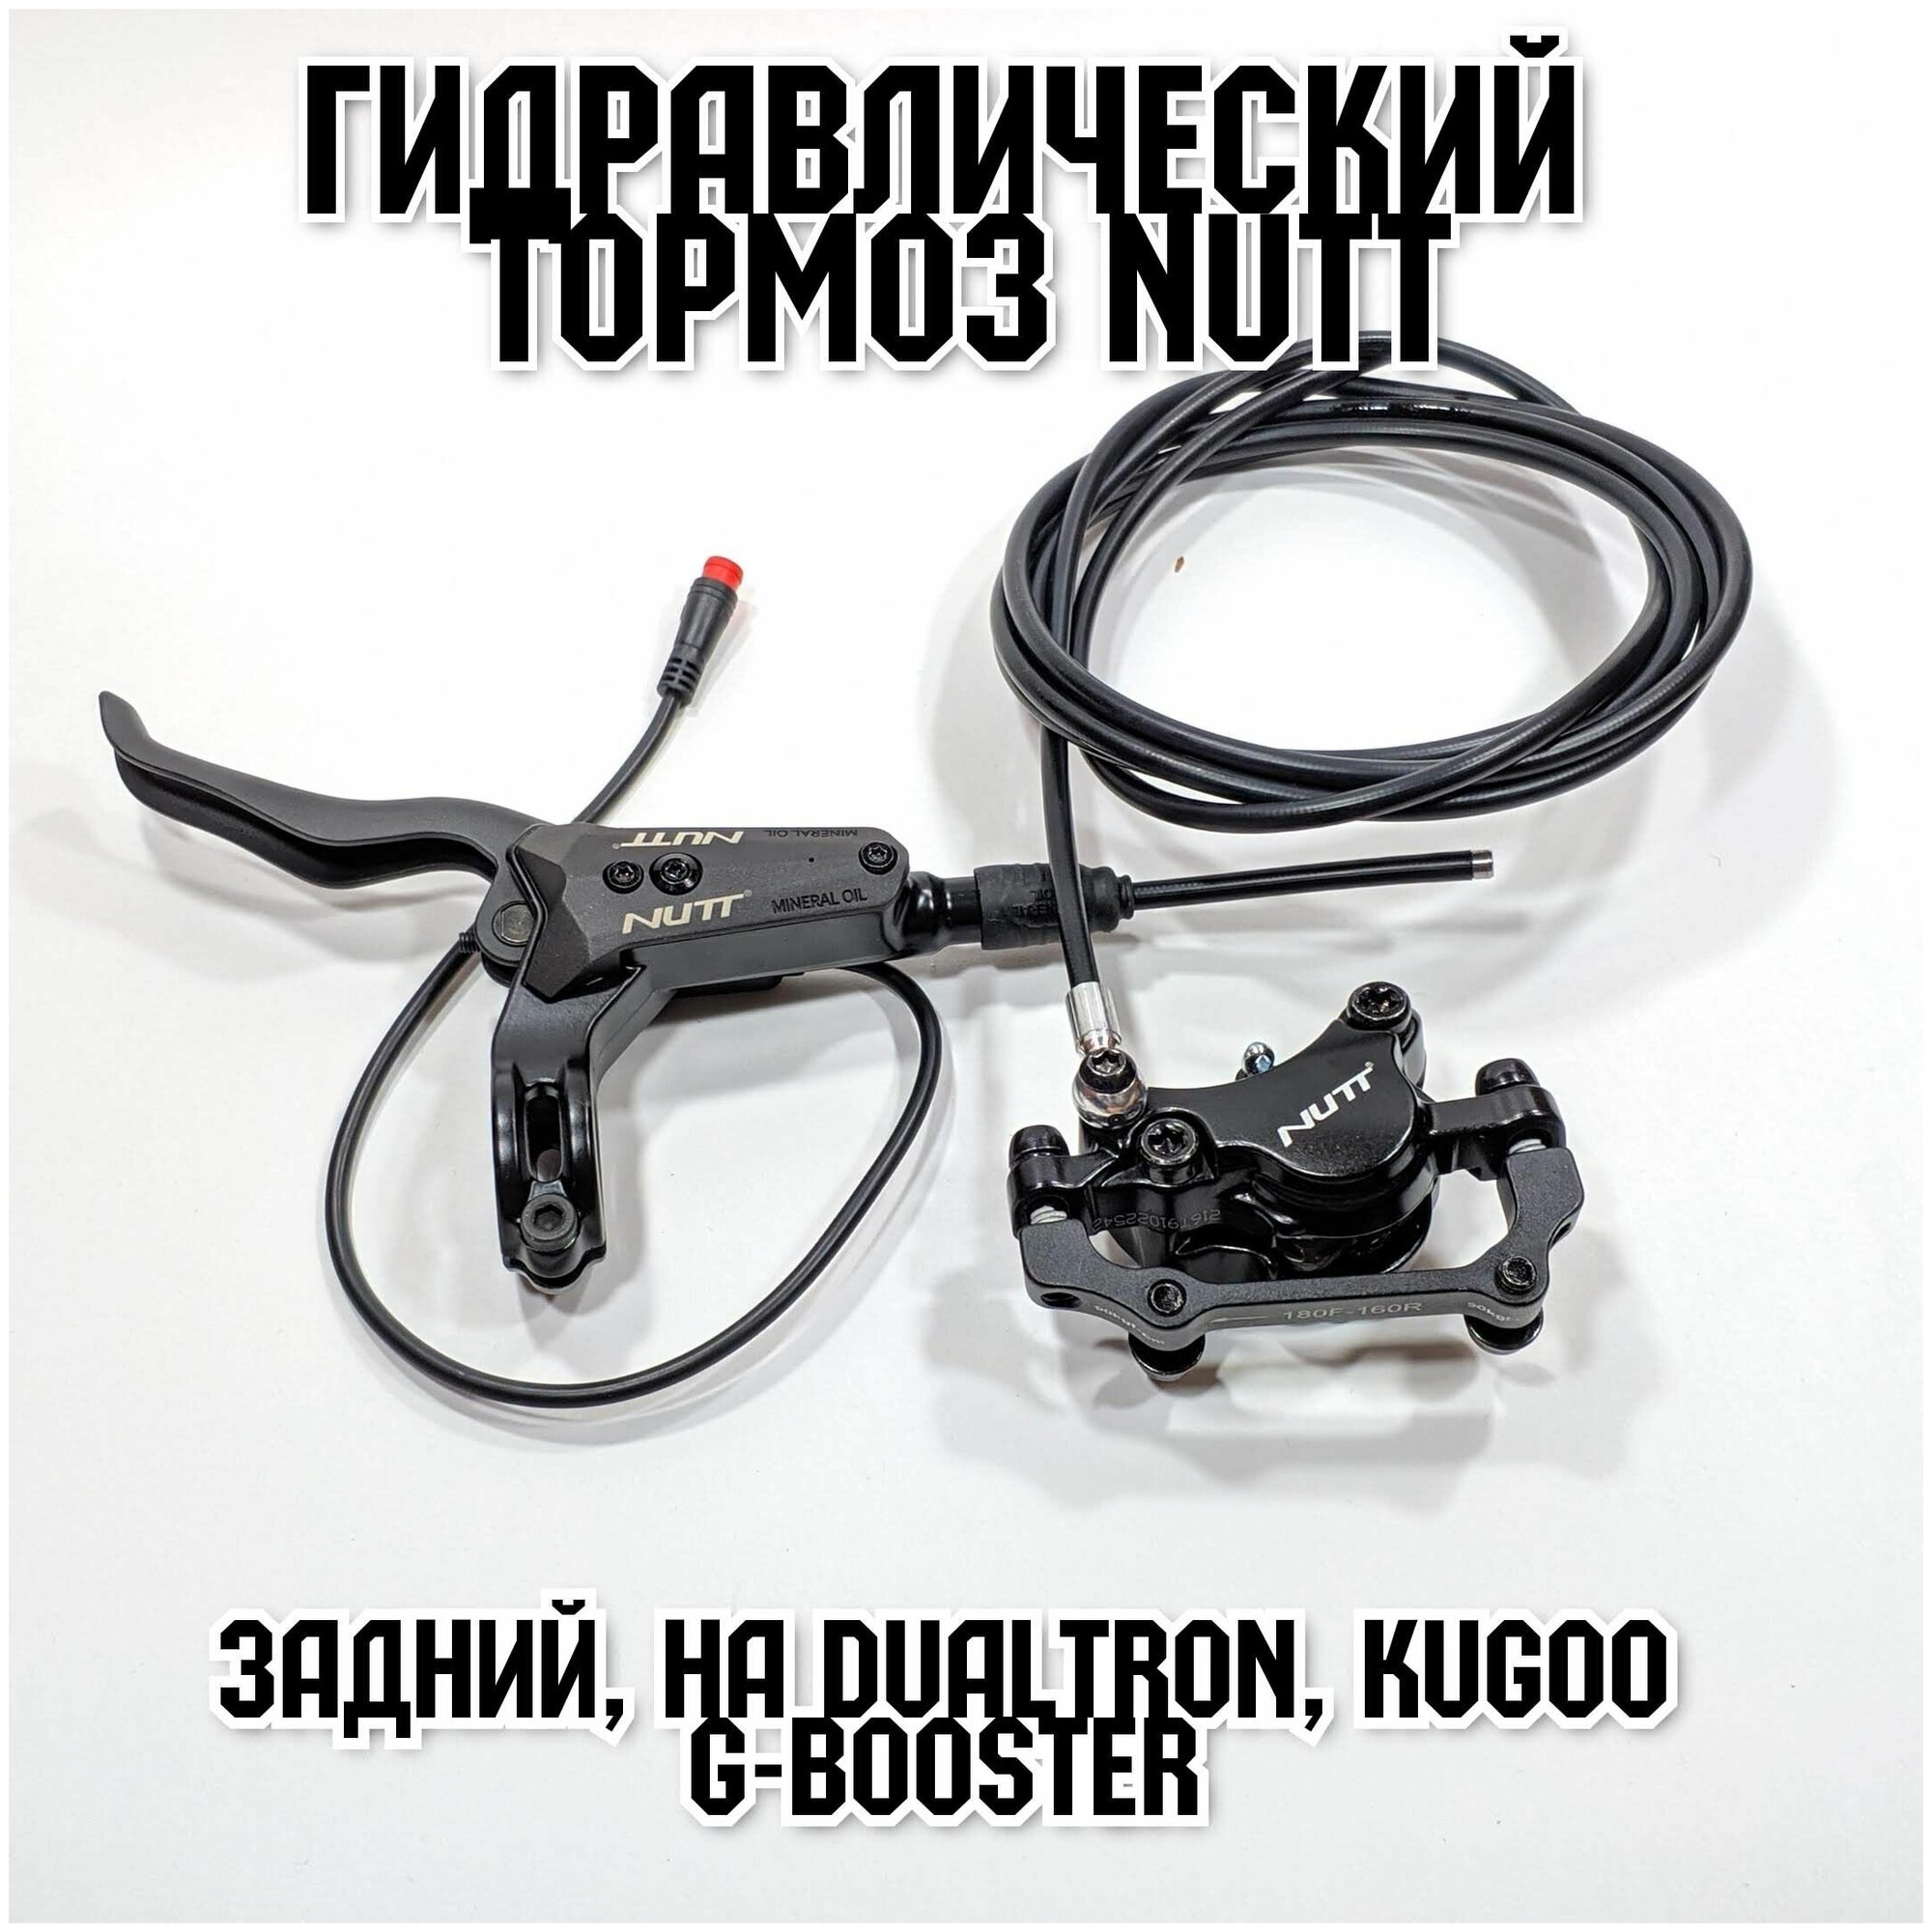 Задний гидравлический тормоз Nutt как на Dualtron / Kugoo G-Booster